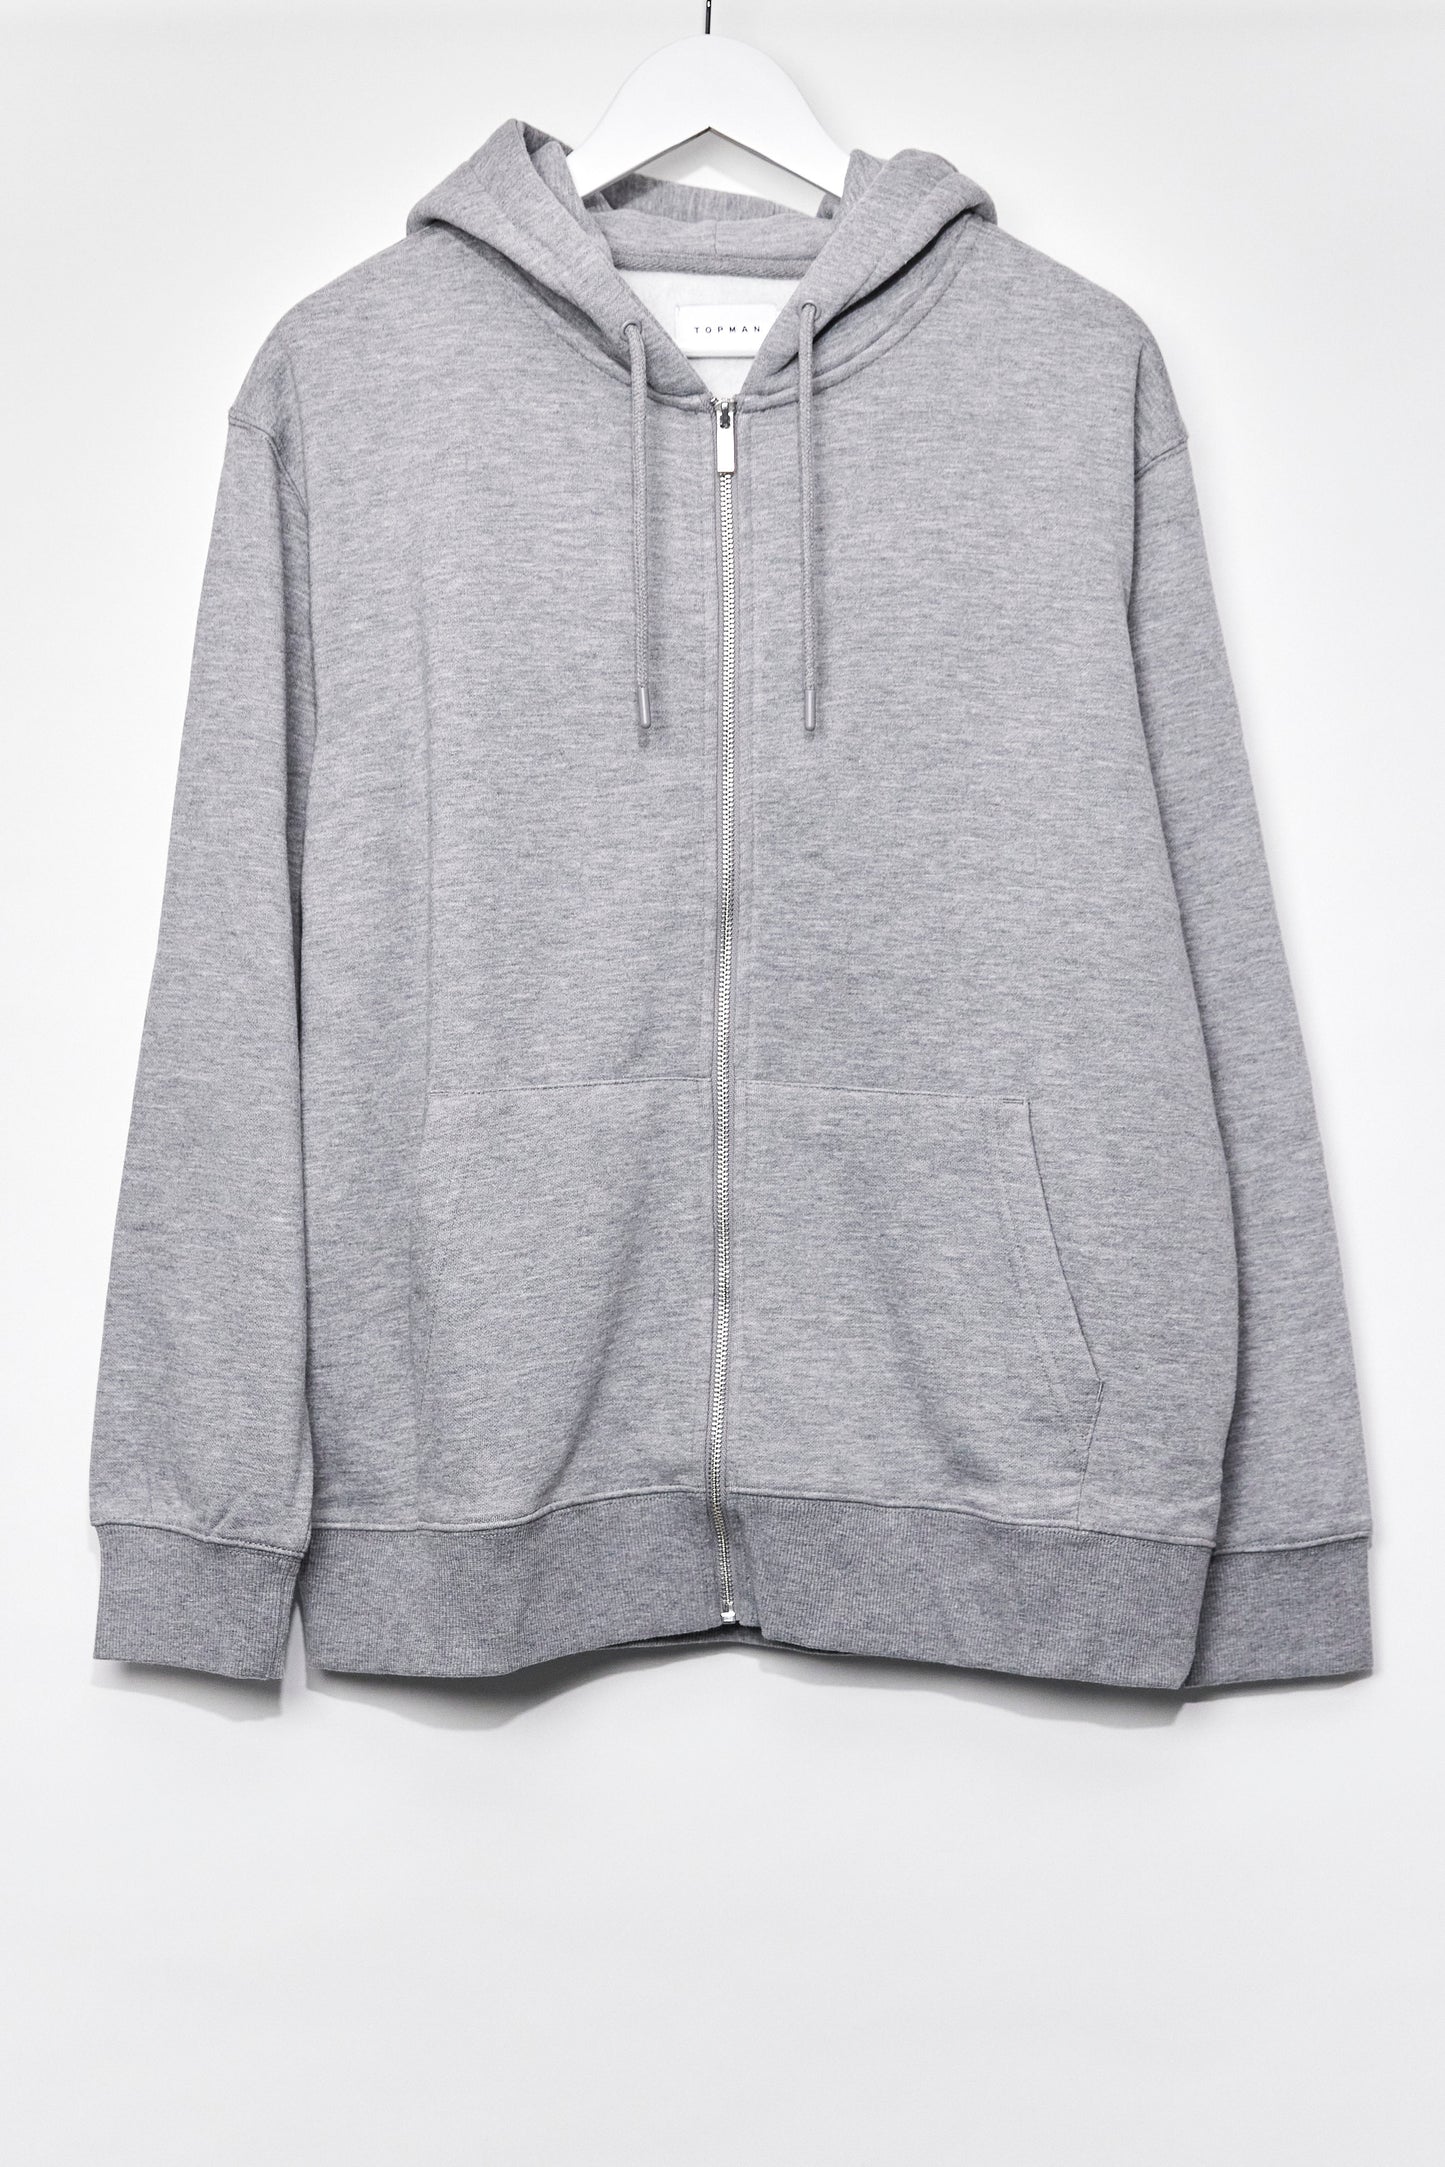 Mens Topman Grey Zip up hoodie size Medium